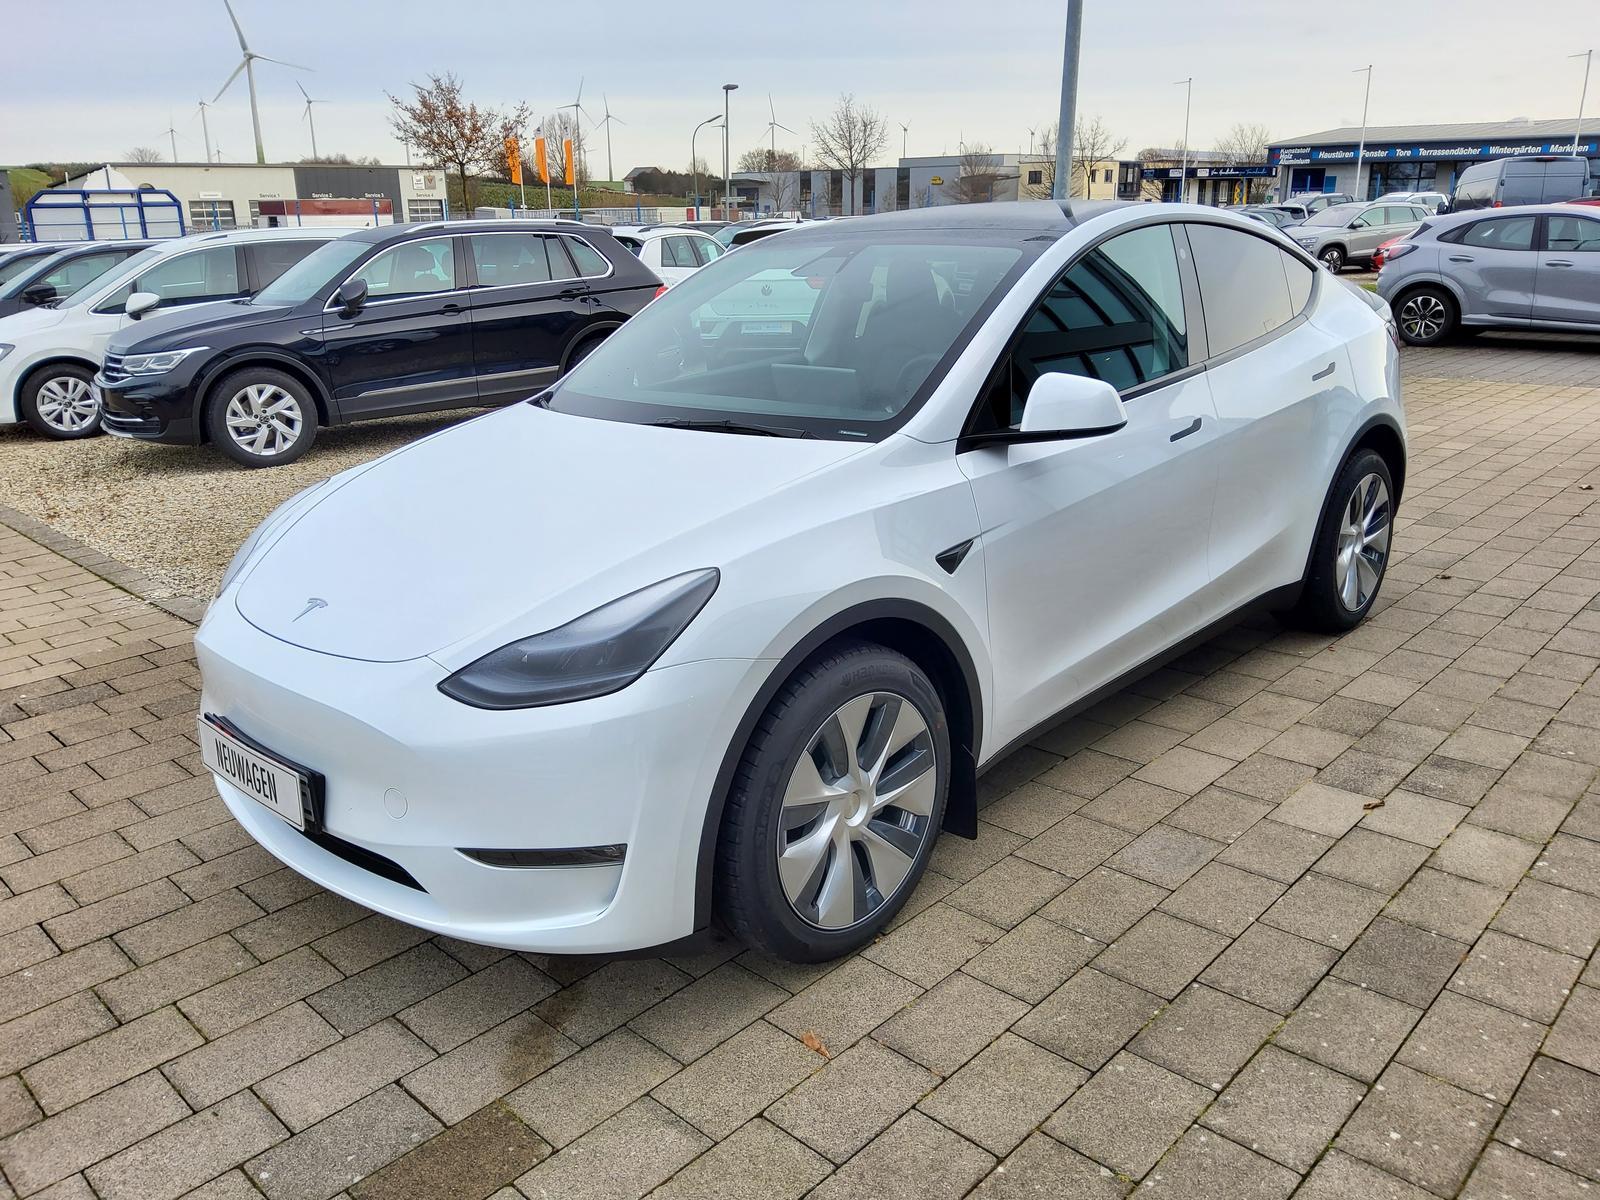 Tesla Model Y in Deutschland bestellbar 